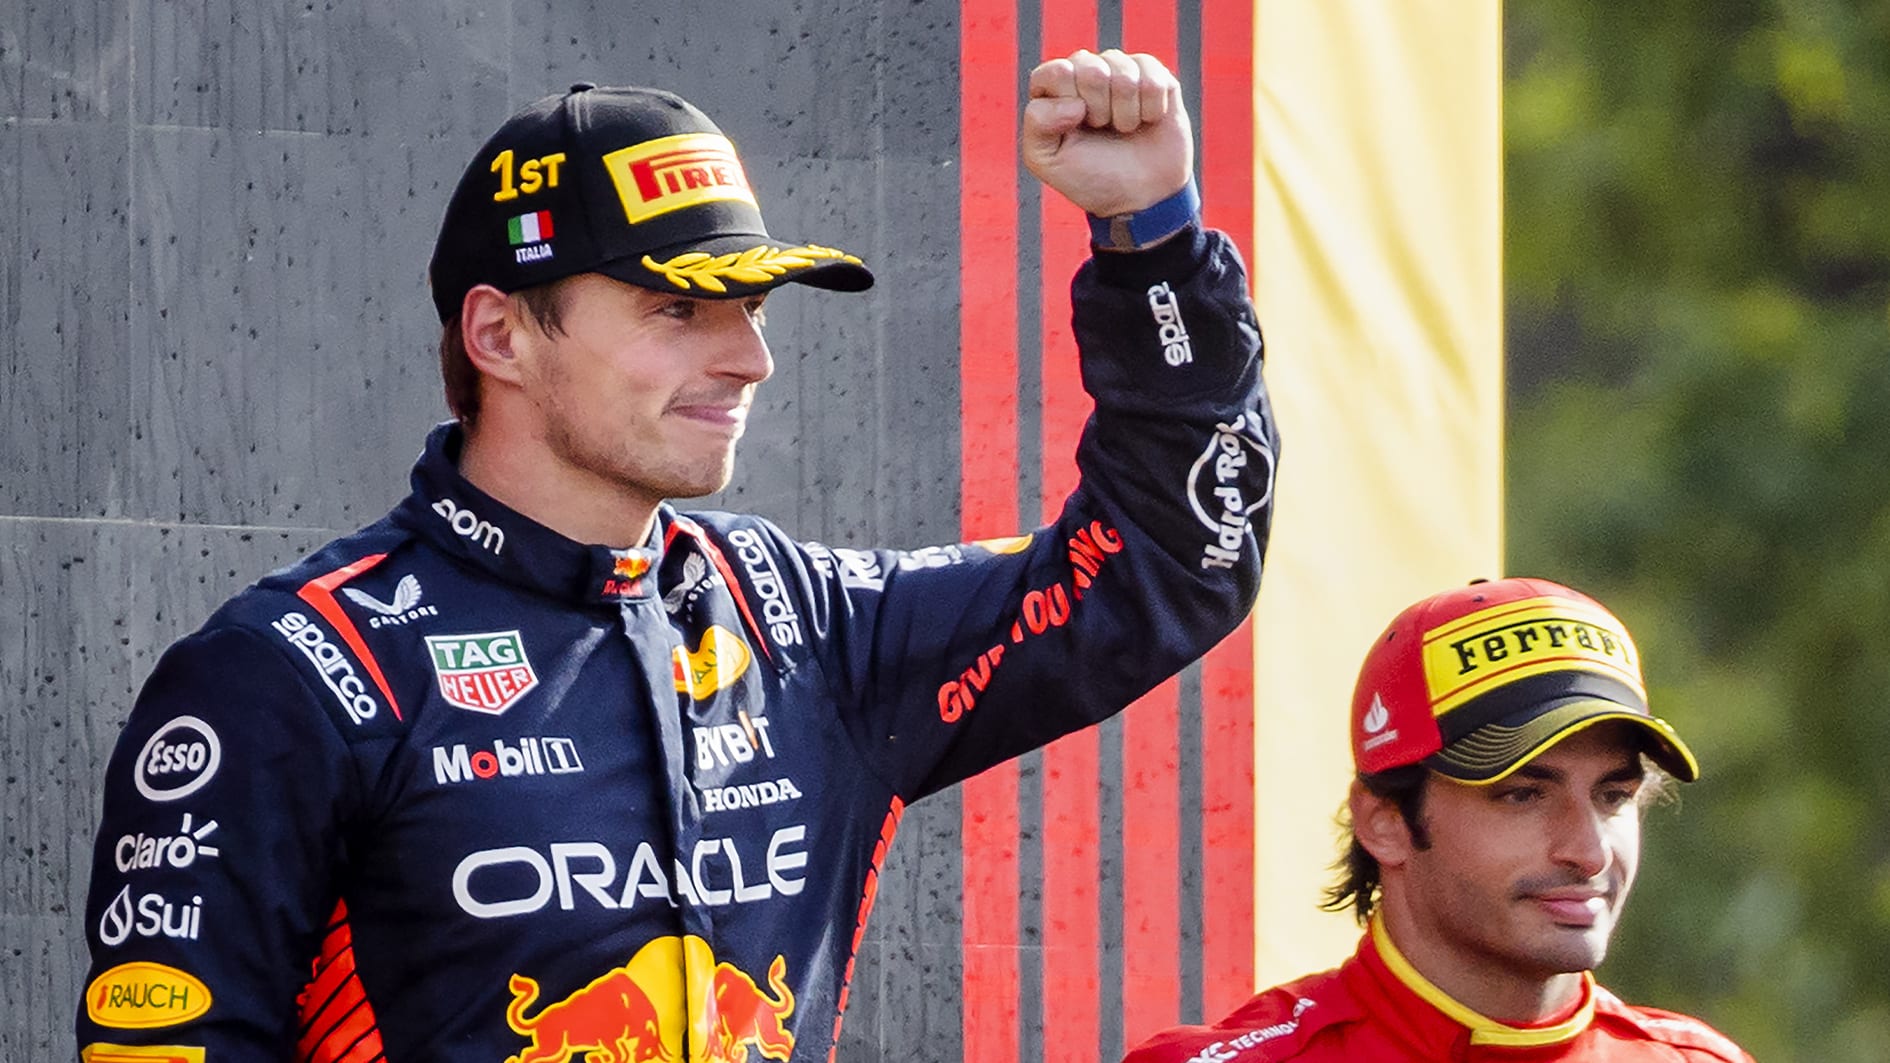 Max Verstappen raises his fist on the podium next to Carlos Sainz after winning the 2023 F1 Italian Grand Prix